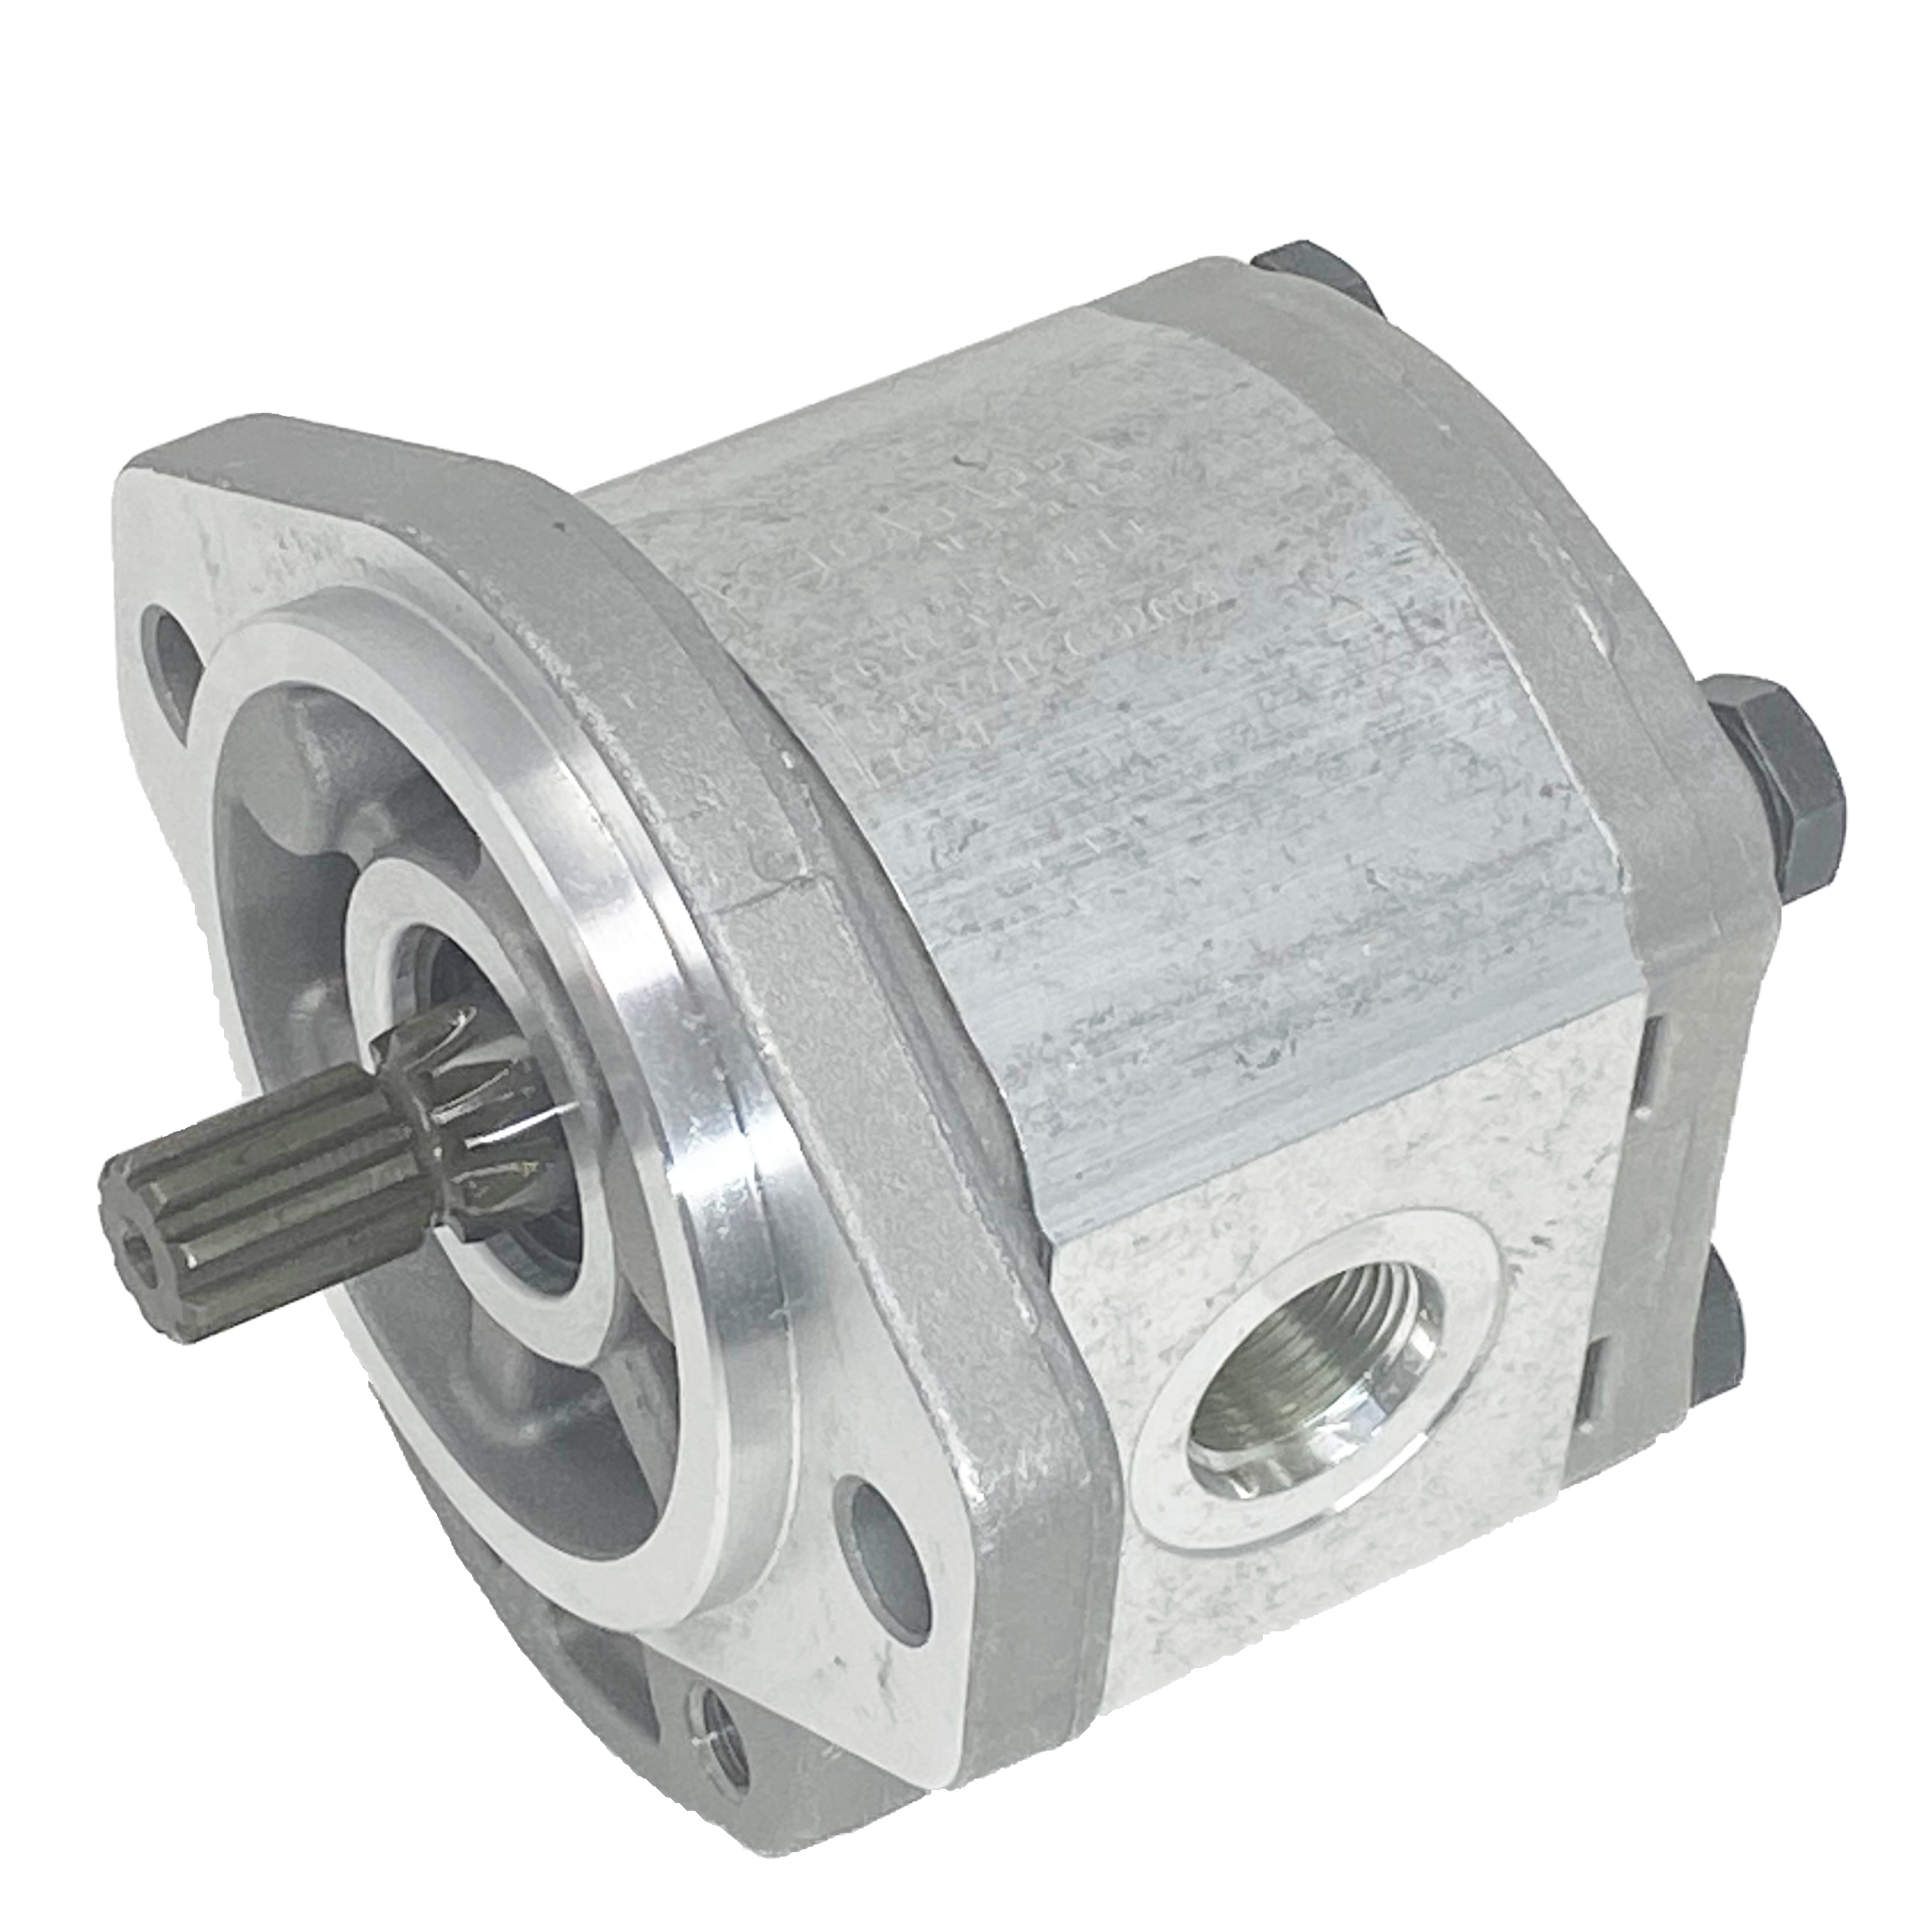 PLM20.11,2B0-03S1-LOC/OC-N-EL : Casappa Polaris Gear Motor, 11.23cc, 3625psi Rated, 3500RPM, Reversible Interior Drain, 9T 16/32dp Shaft, SAE A 2-Bolt Flange, 0.625 (5/8") #10 SAE Inlet, 0.625 (5/8") #10 SAE Outlet, Aluminum Body & Flange